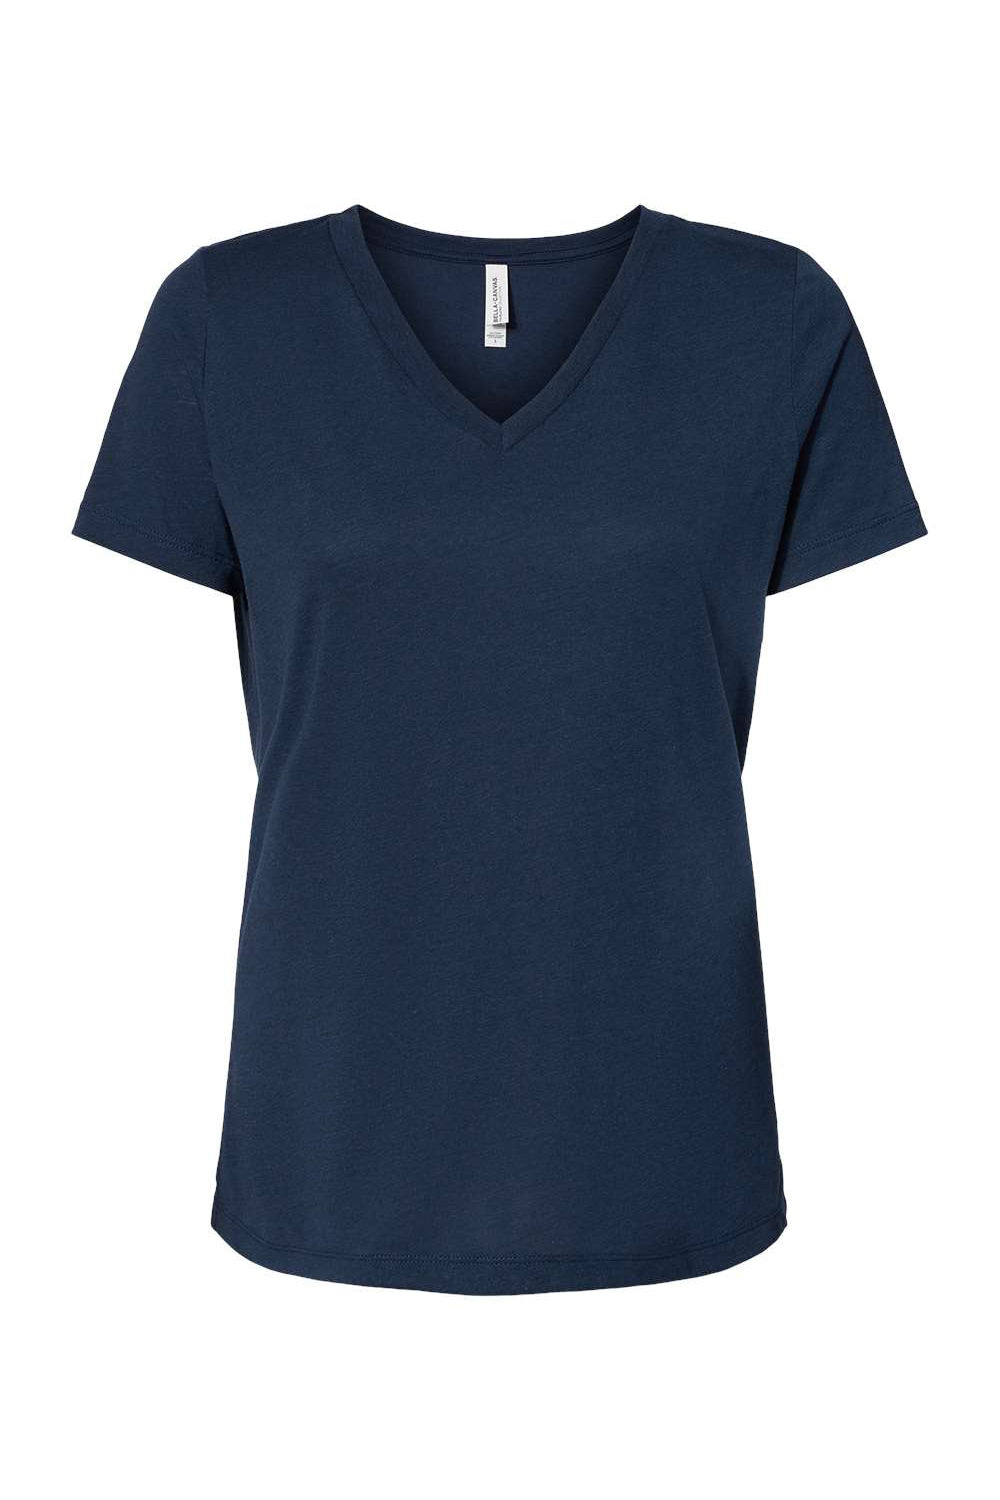 Bella + Canvas BC6415 Womens Short Sleeve V-Neck T-Shirt Solid Navy Blue Flat Front